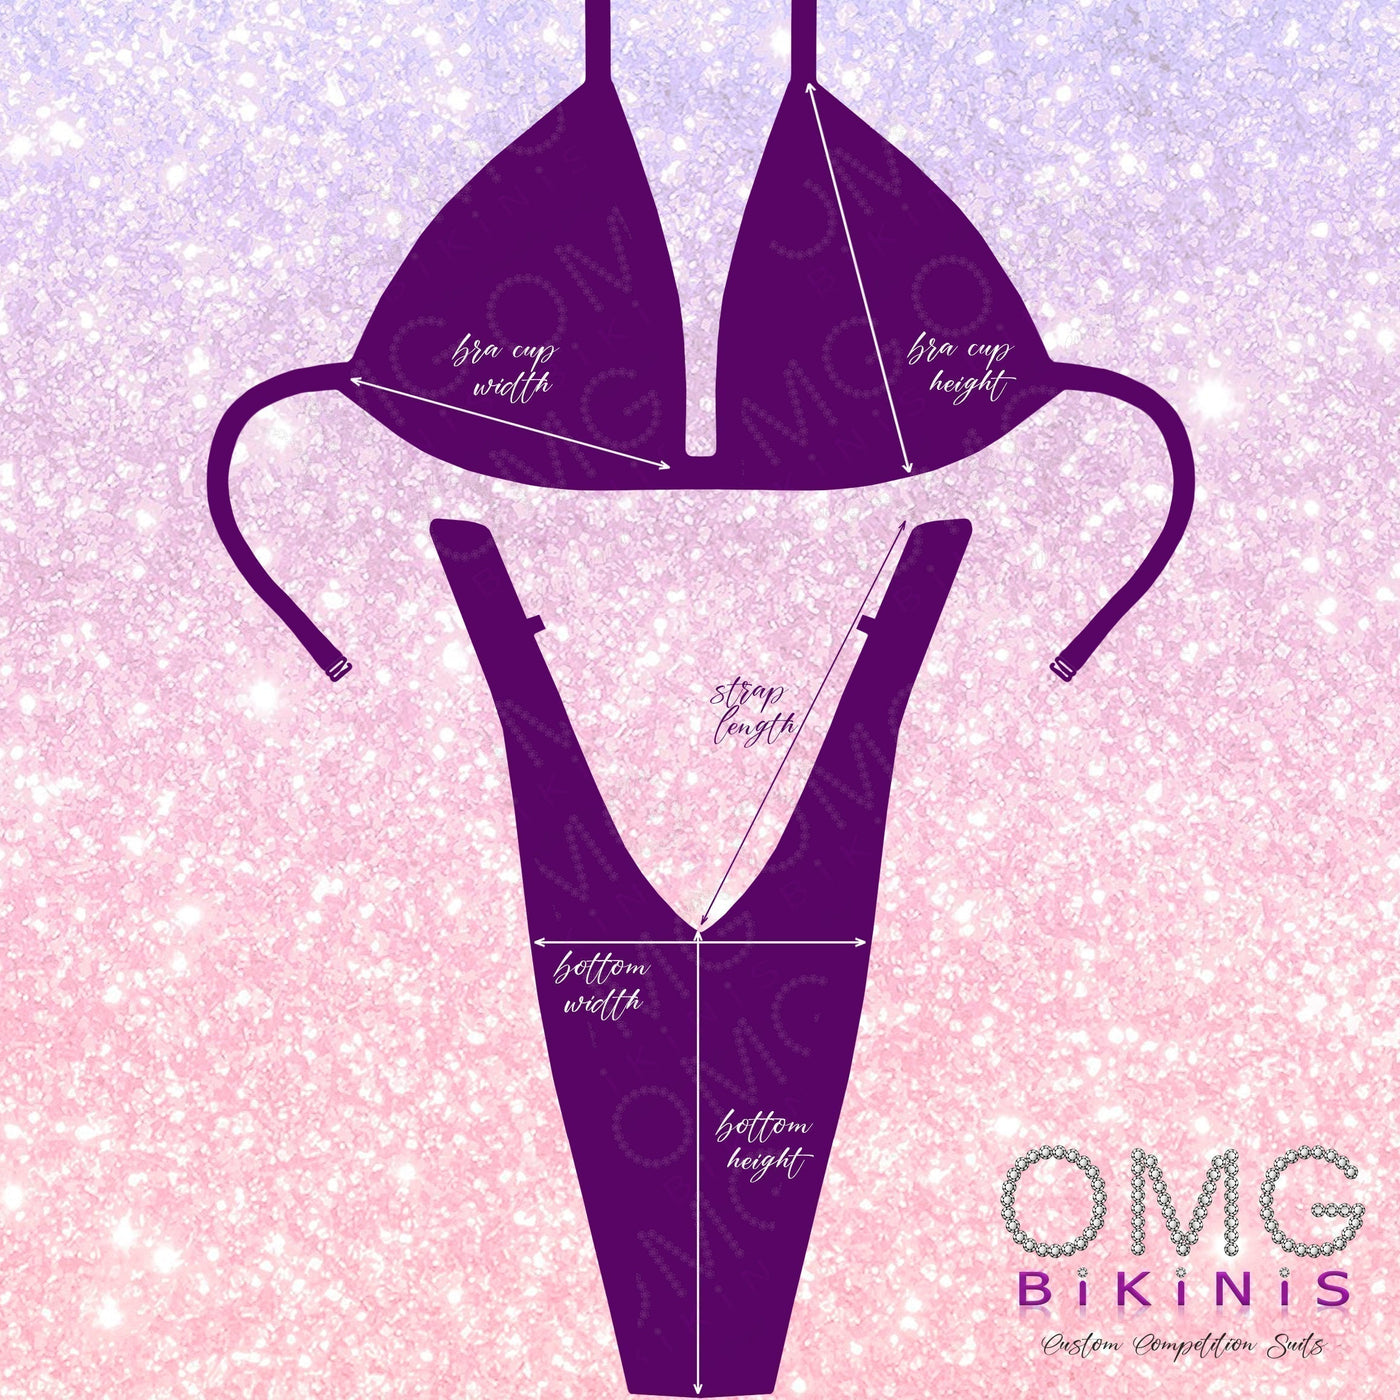 Michelle Figure/WPD Competition Suit S/S | OMG Bikinis Rentals